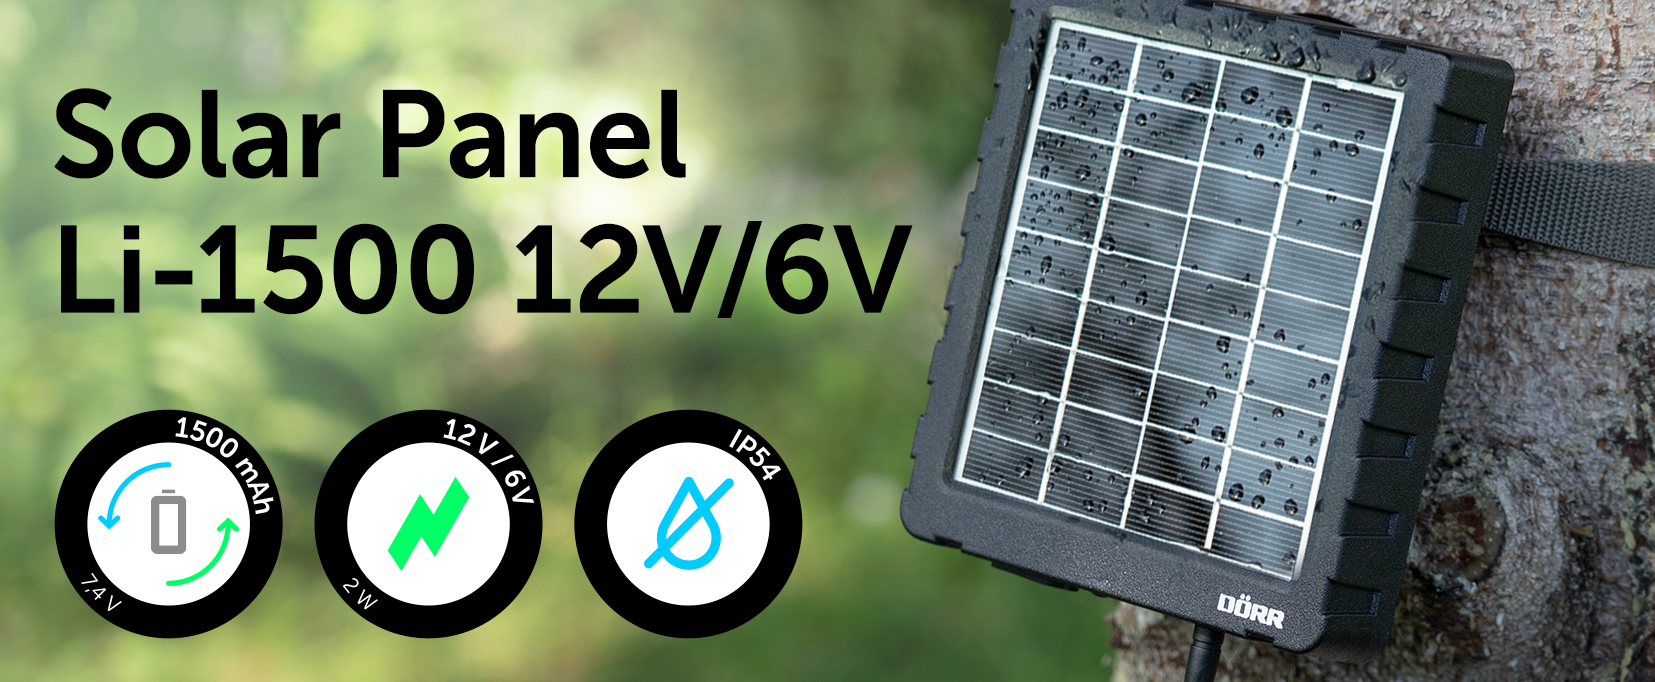 Solar Panel 12V/6V